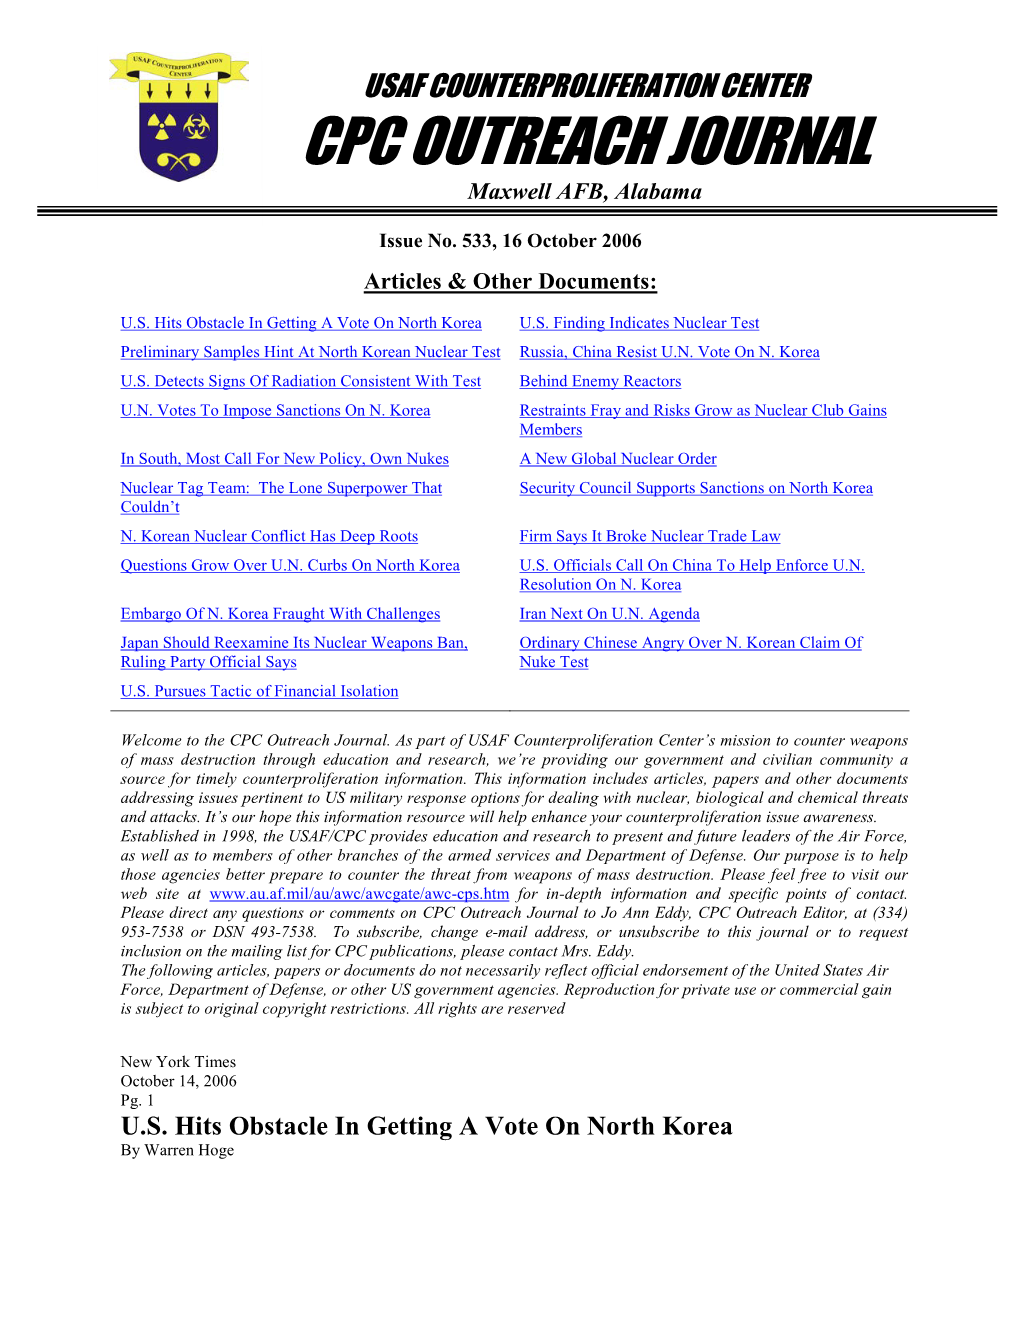 USAF Counterproliferation Center CPC Outreach Journal #533